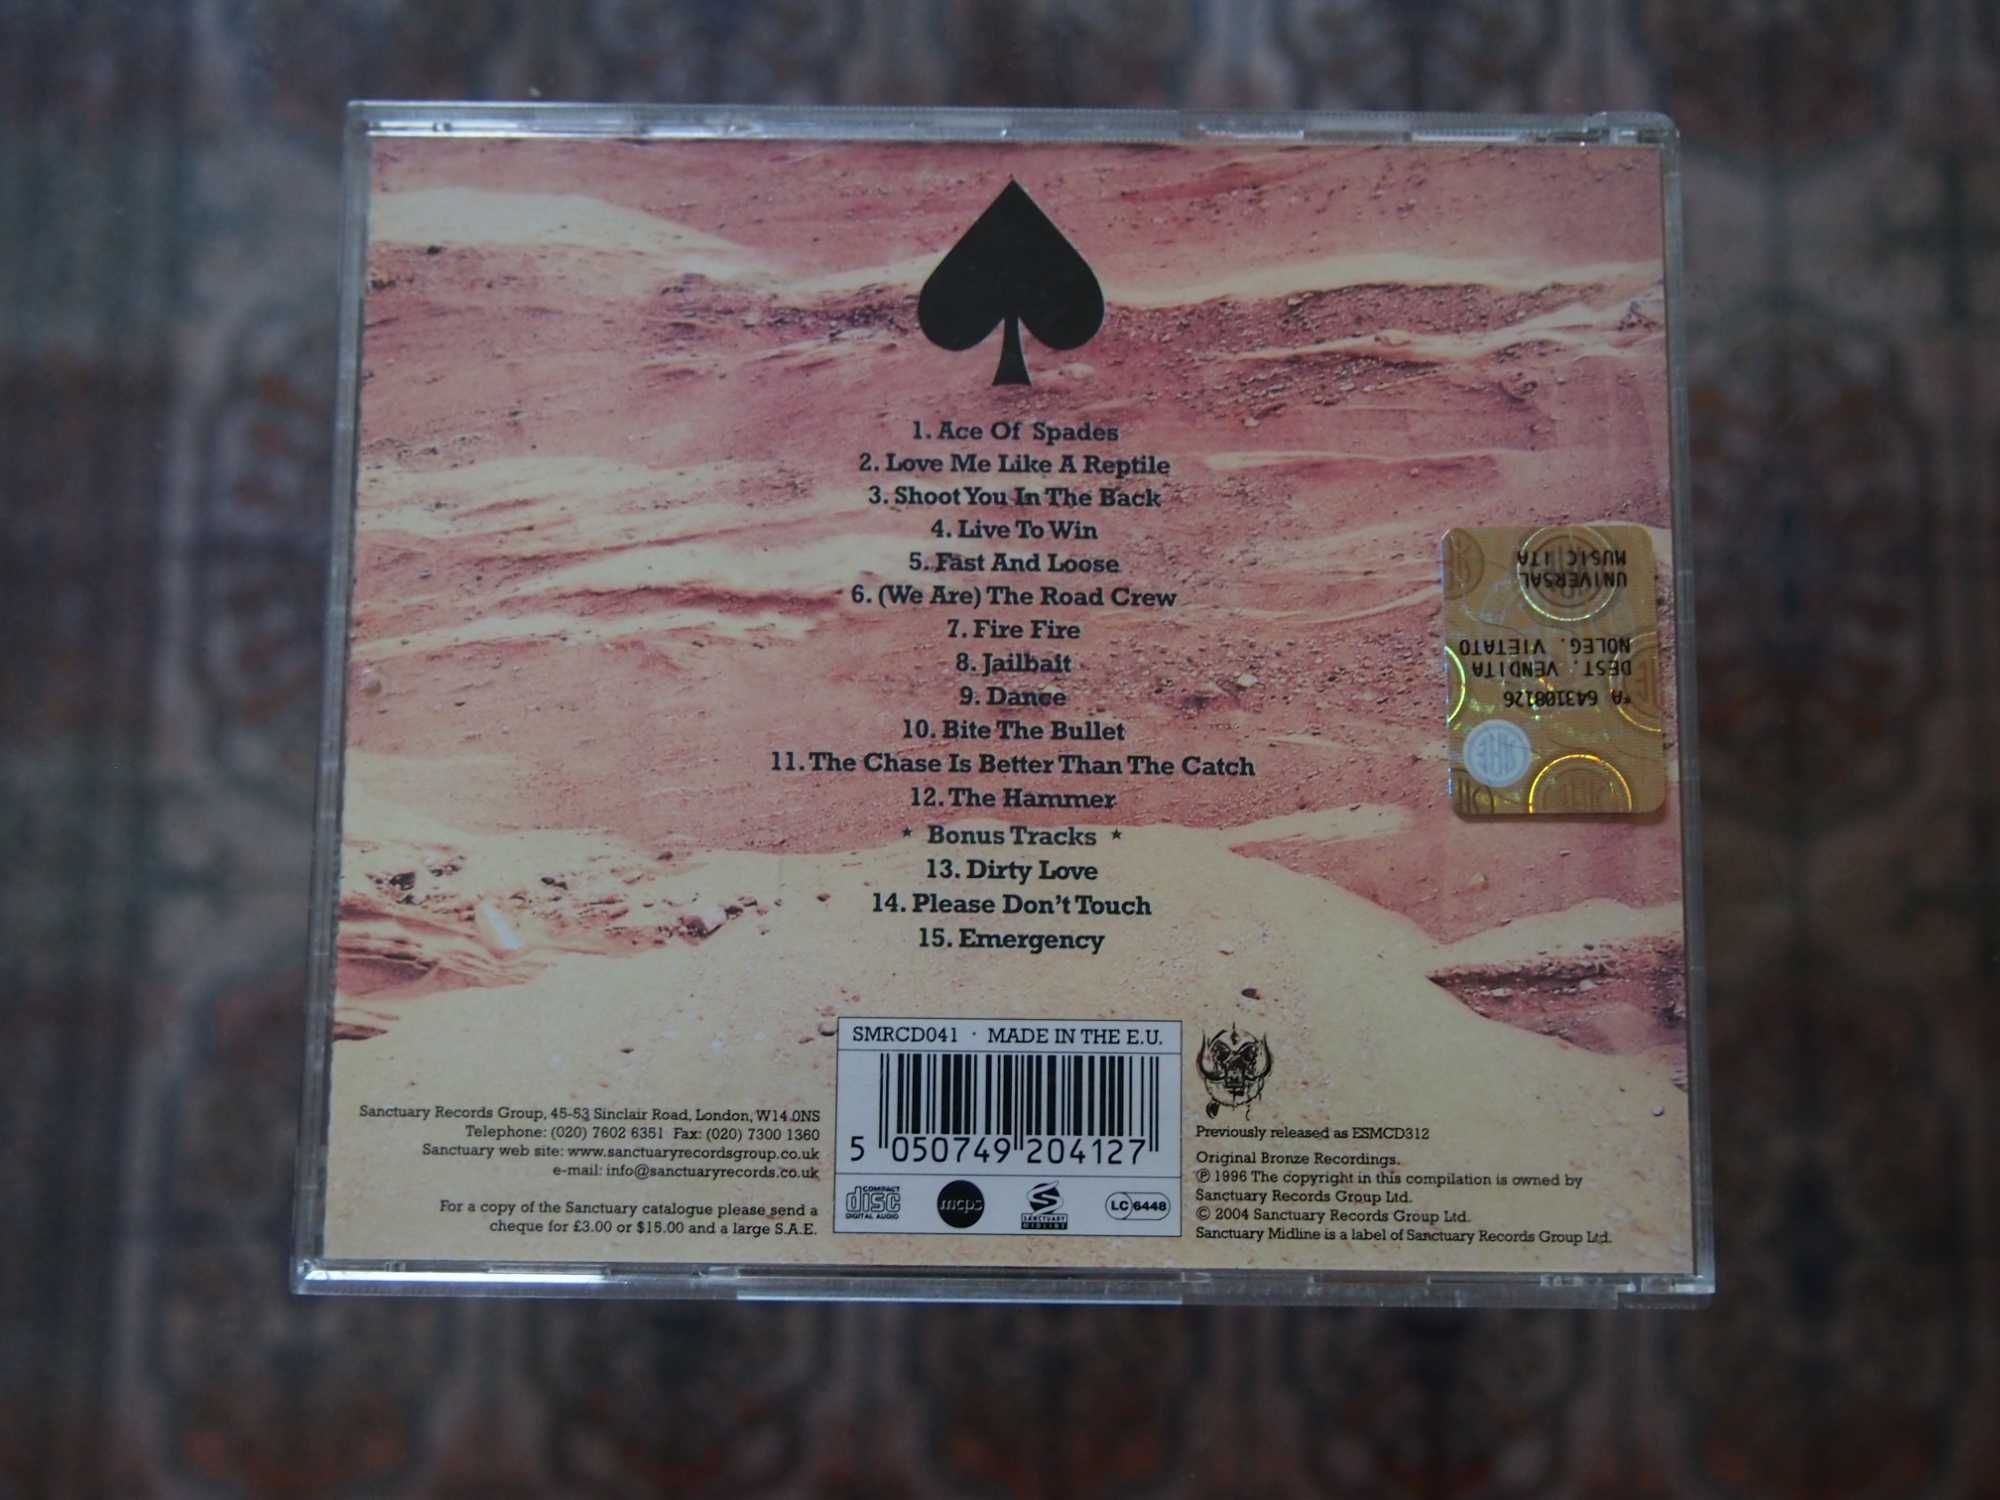 Motorhead "Ace of Spades" cd